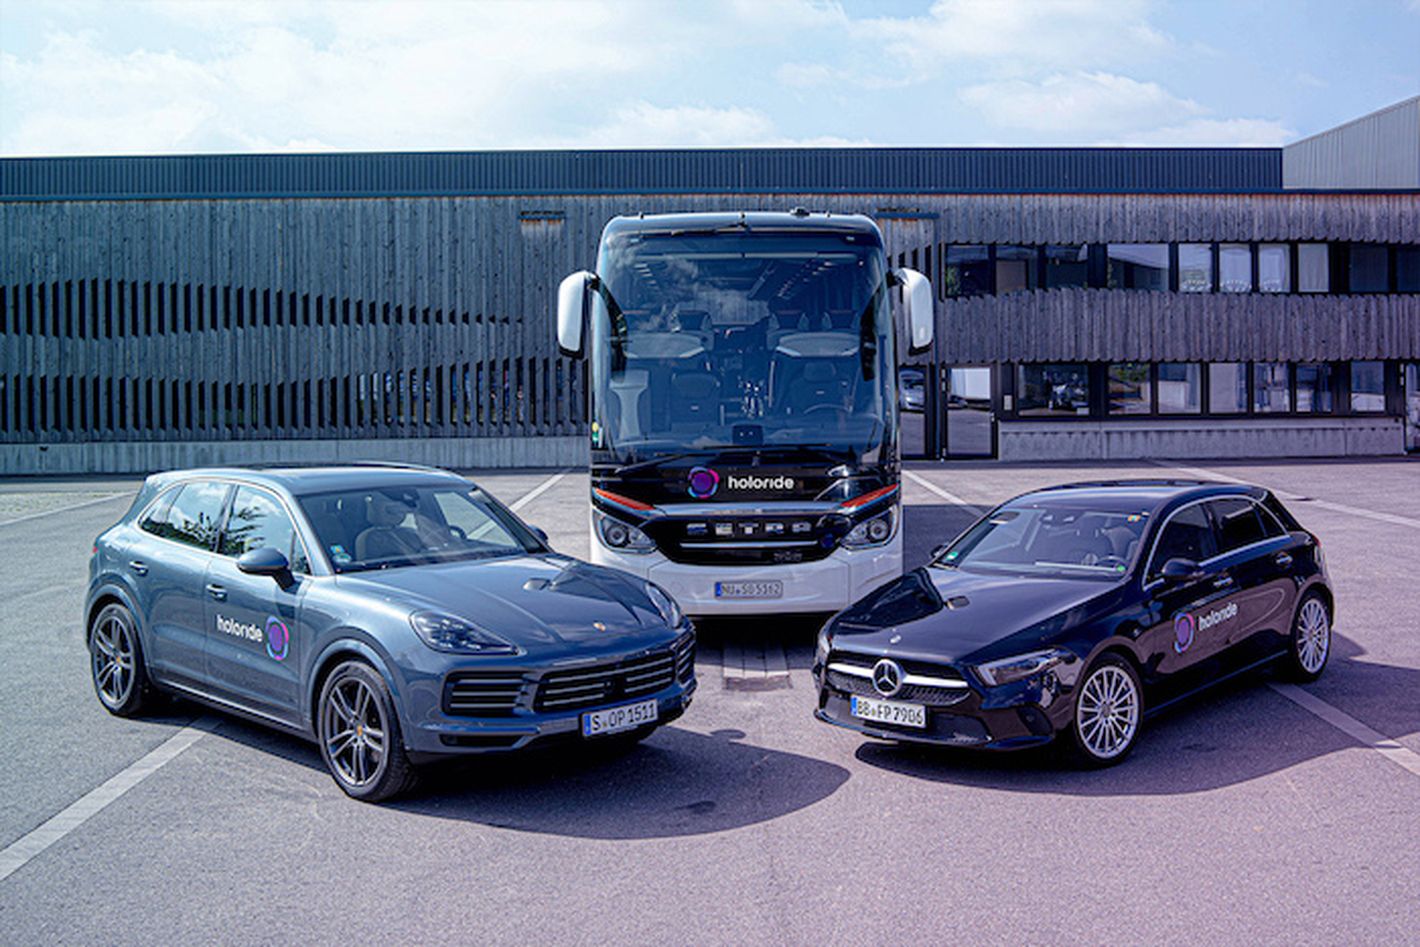 Porsche, Daimler and EvoBus vehicles standing on a parking lot